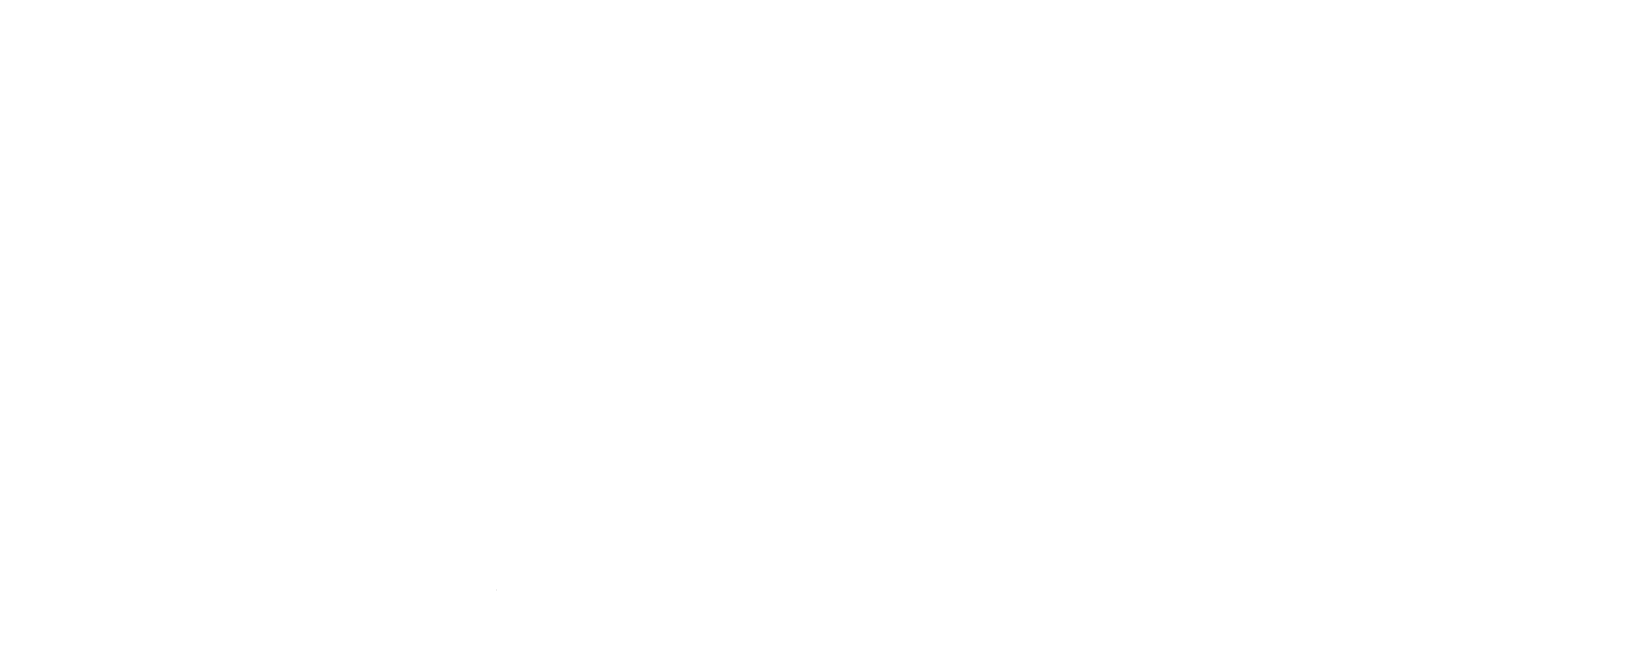 Jagawiesn_Logo_final_HICHAM2